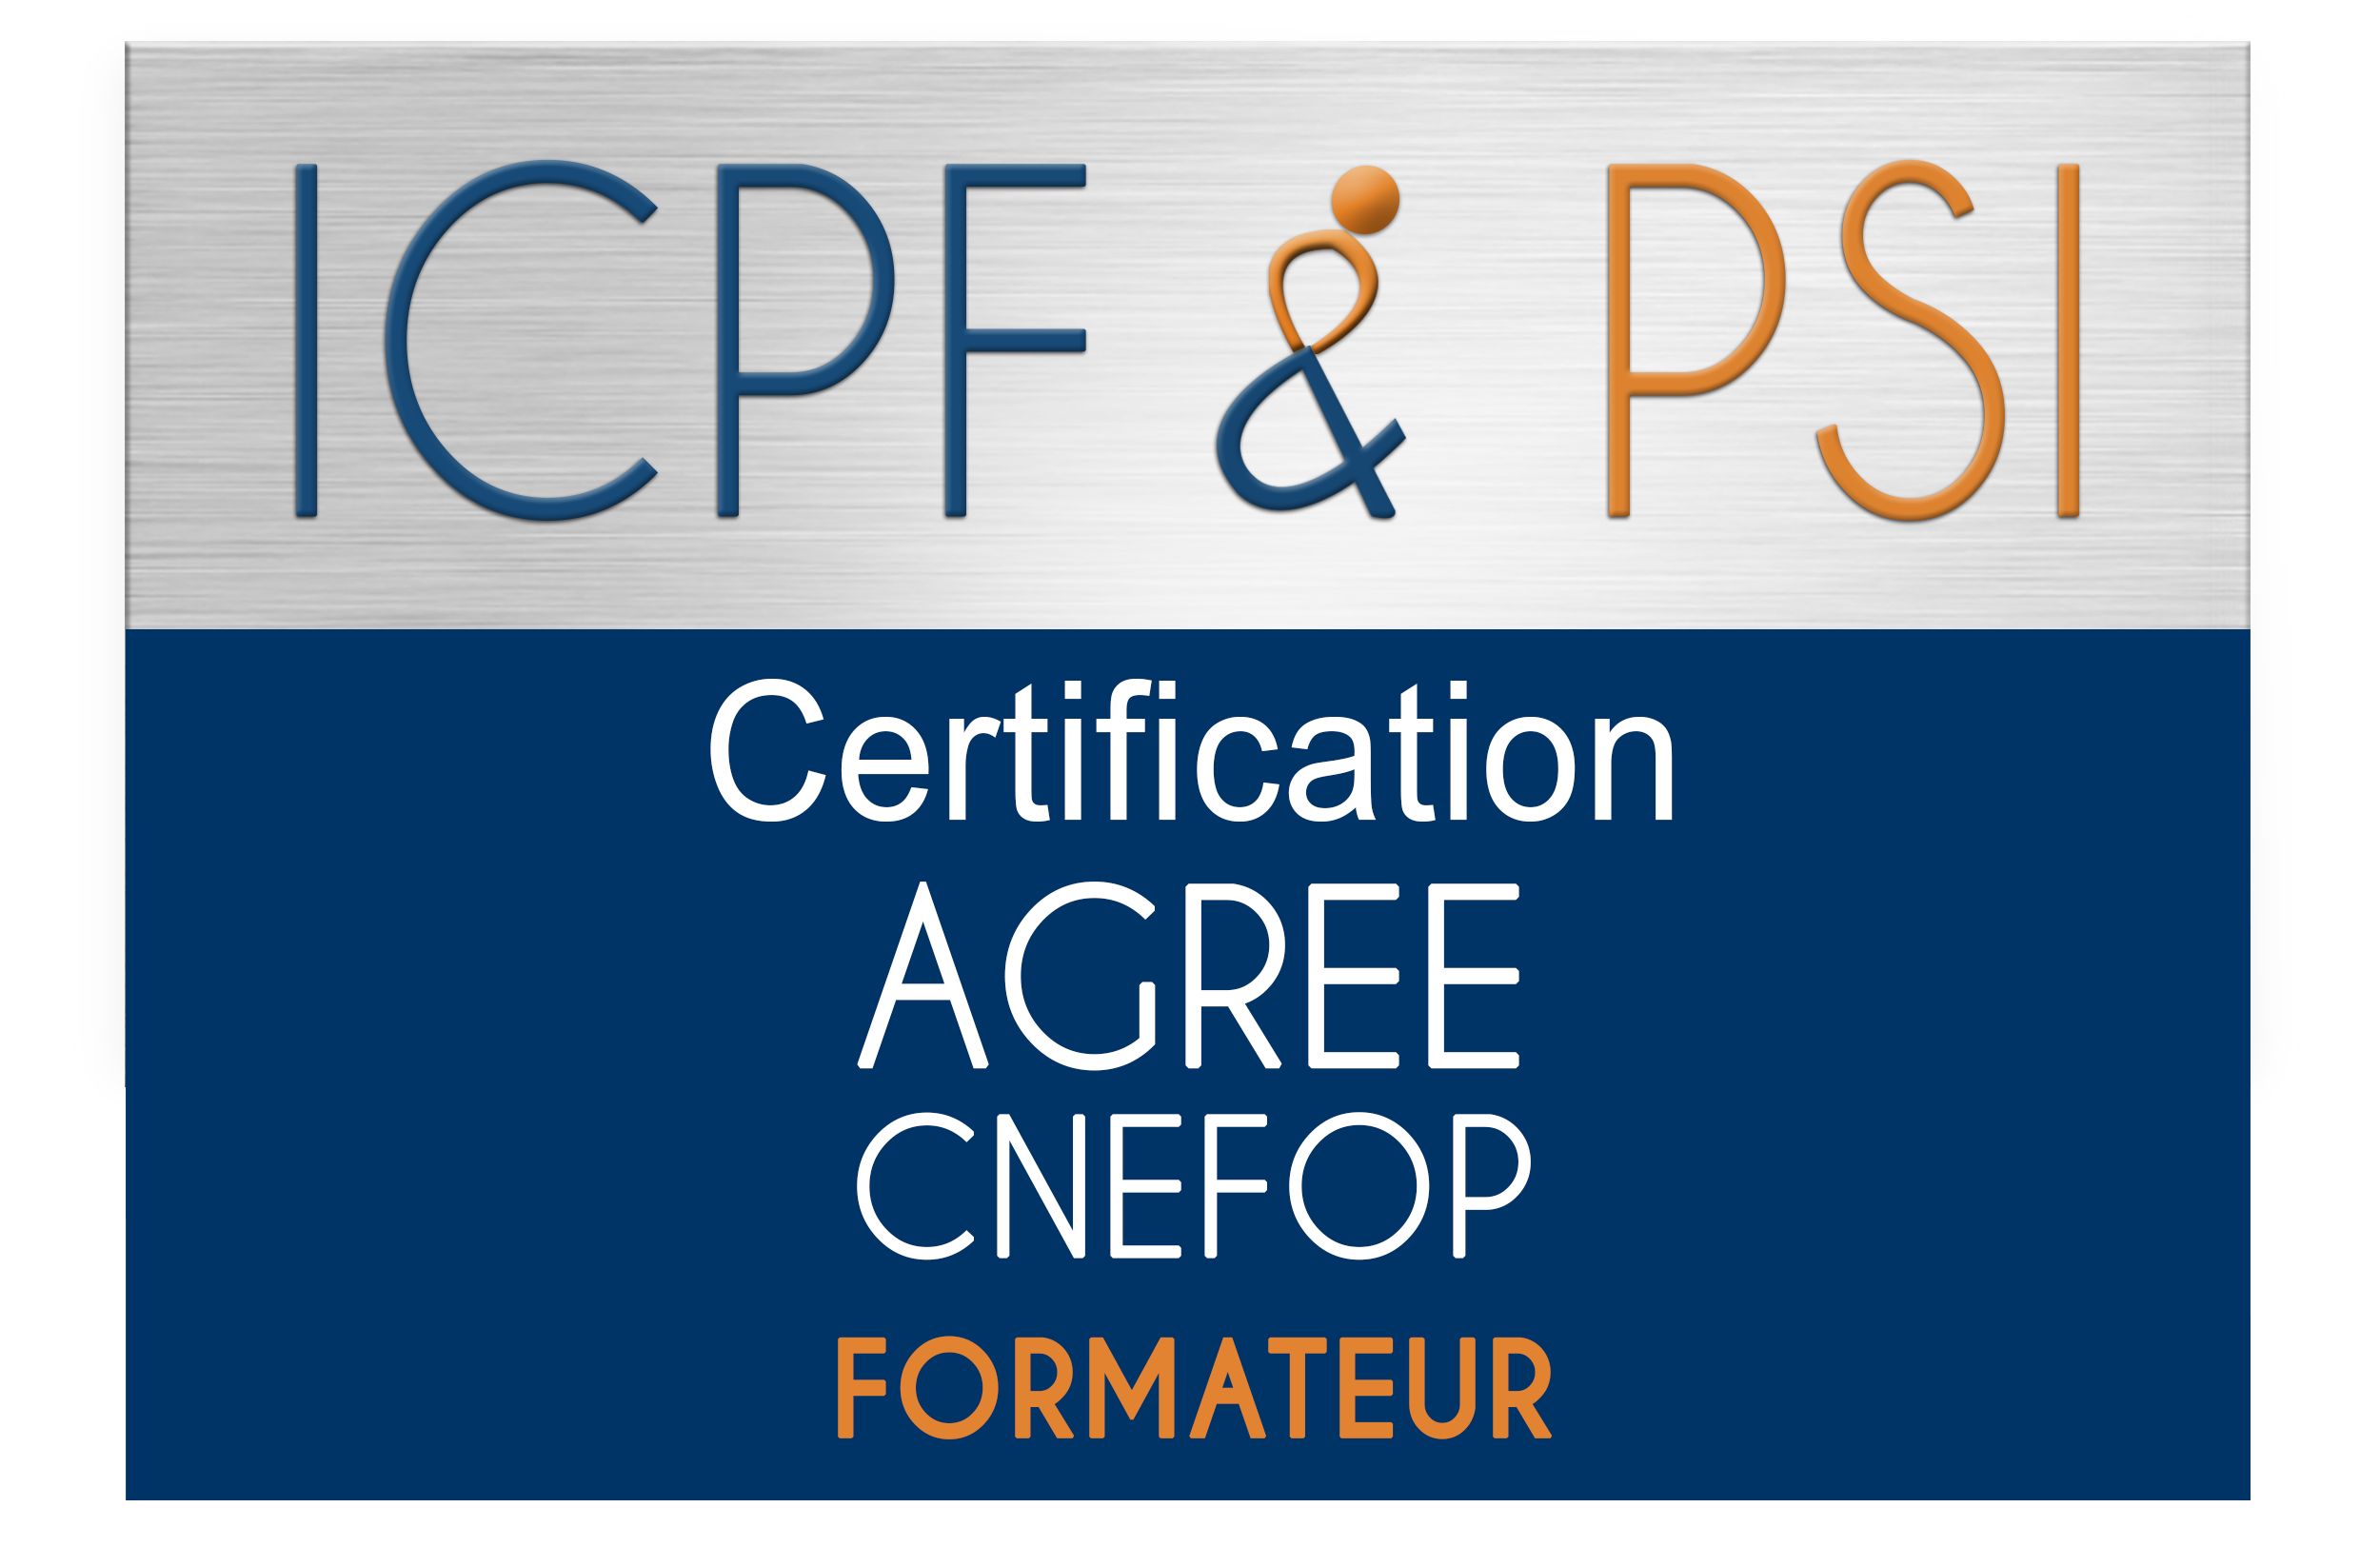 ICPF&PSI forma petit.png